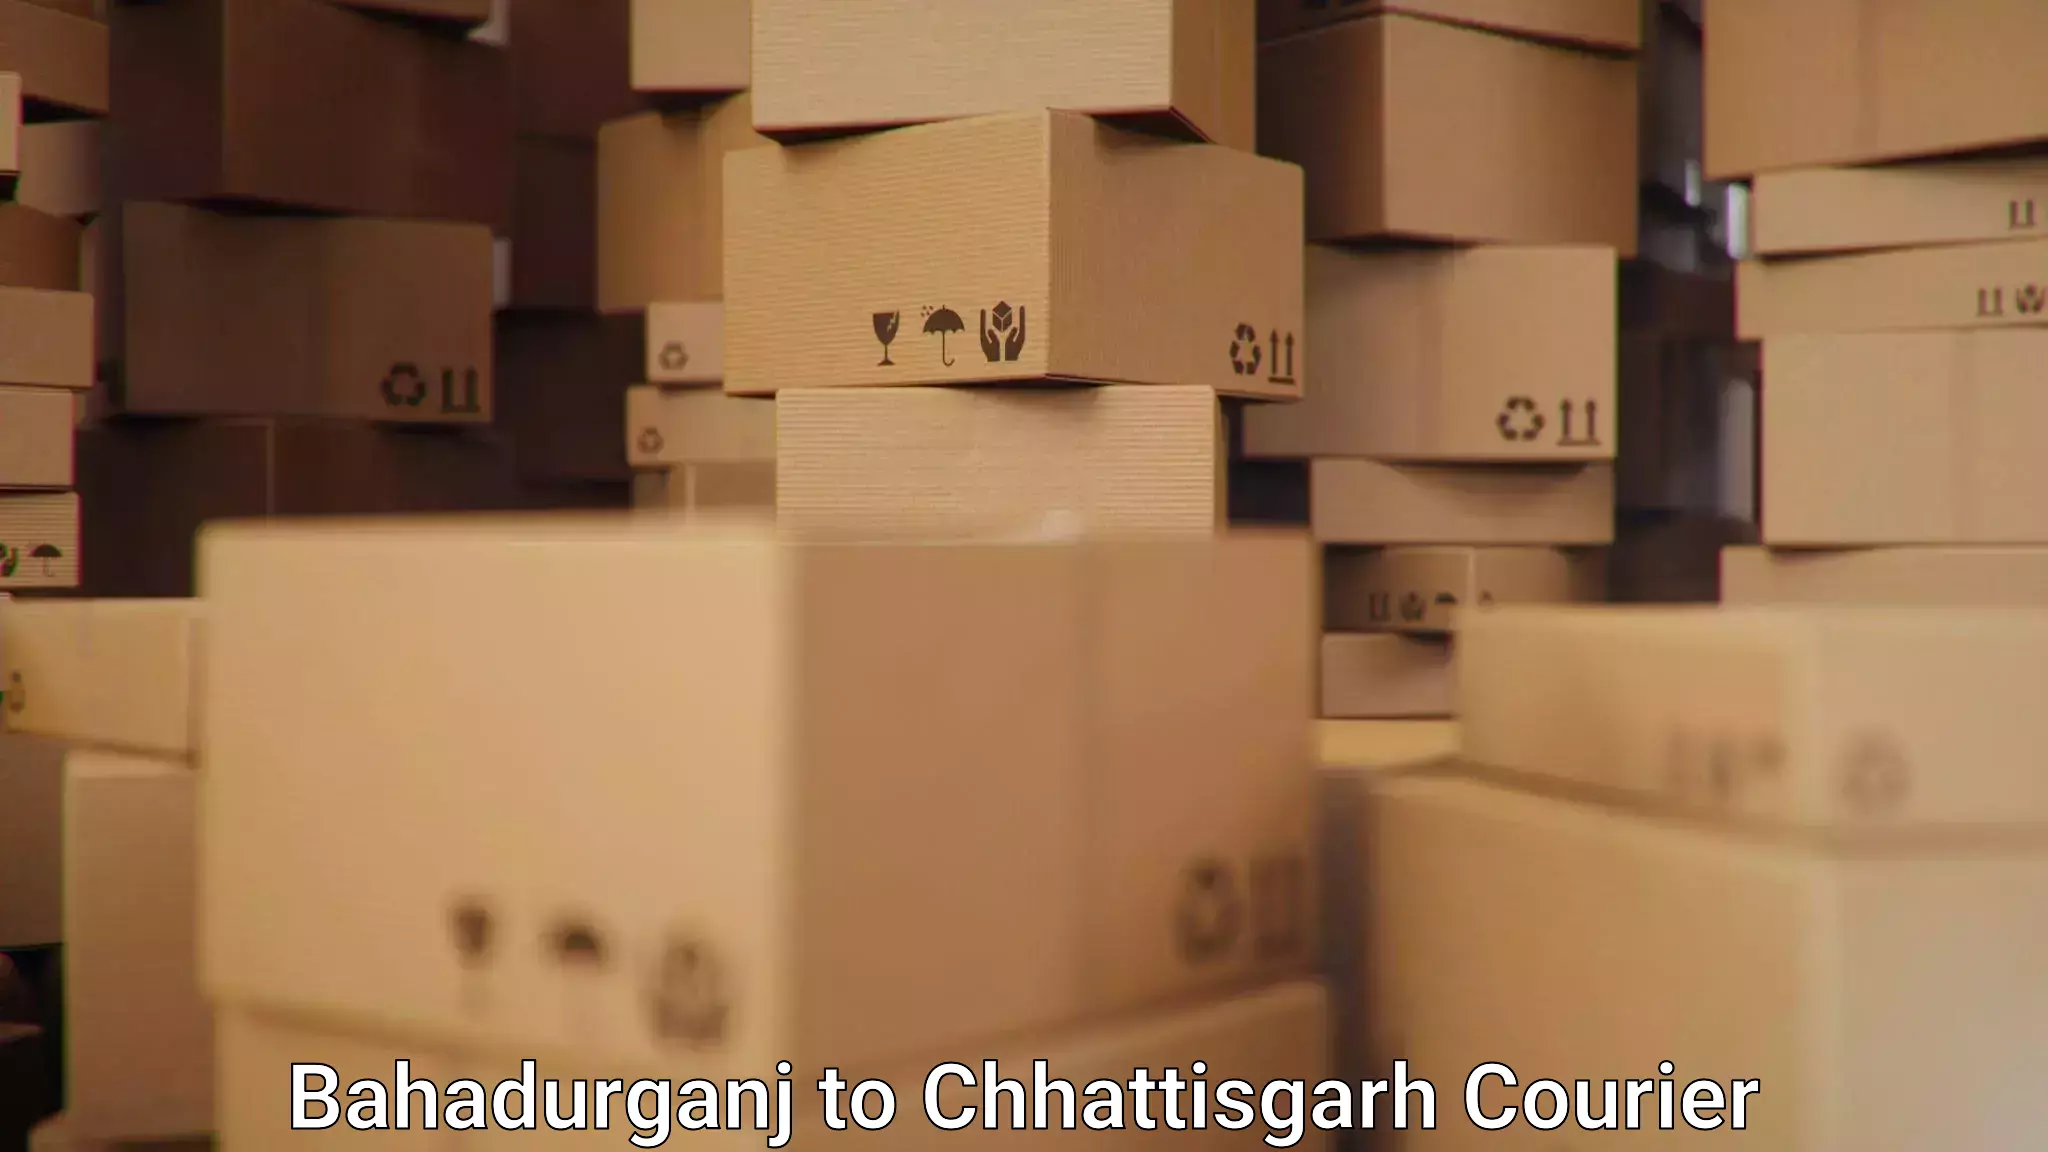 Efficient order fulfillment Bahadurganj to Raipur